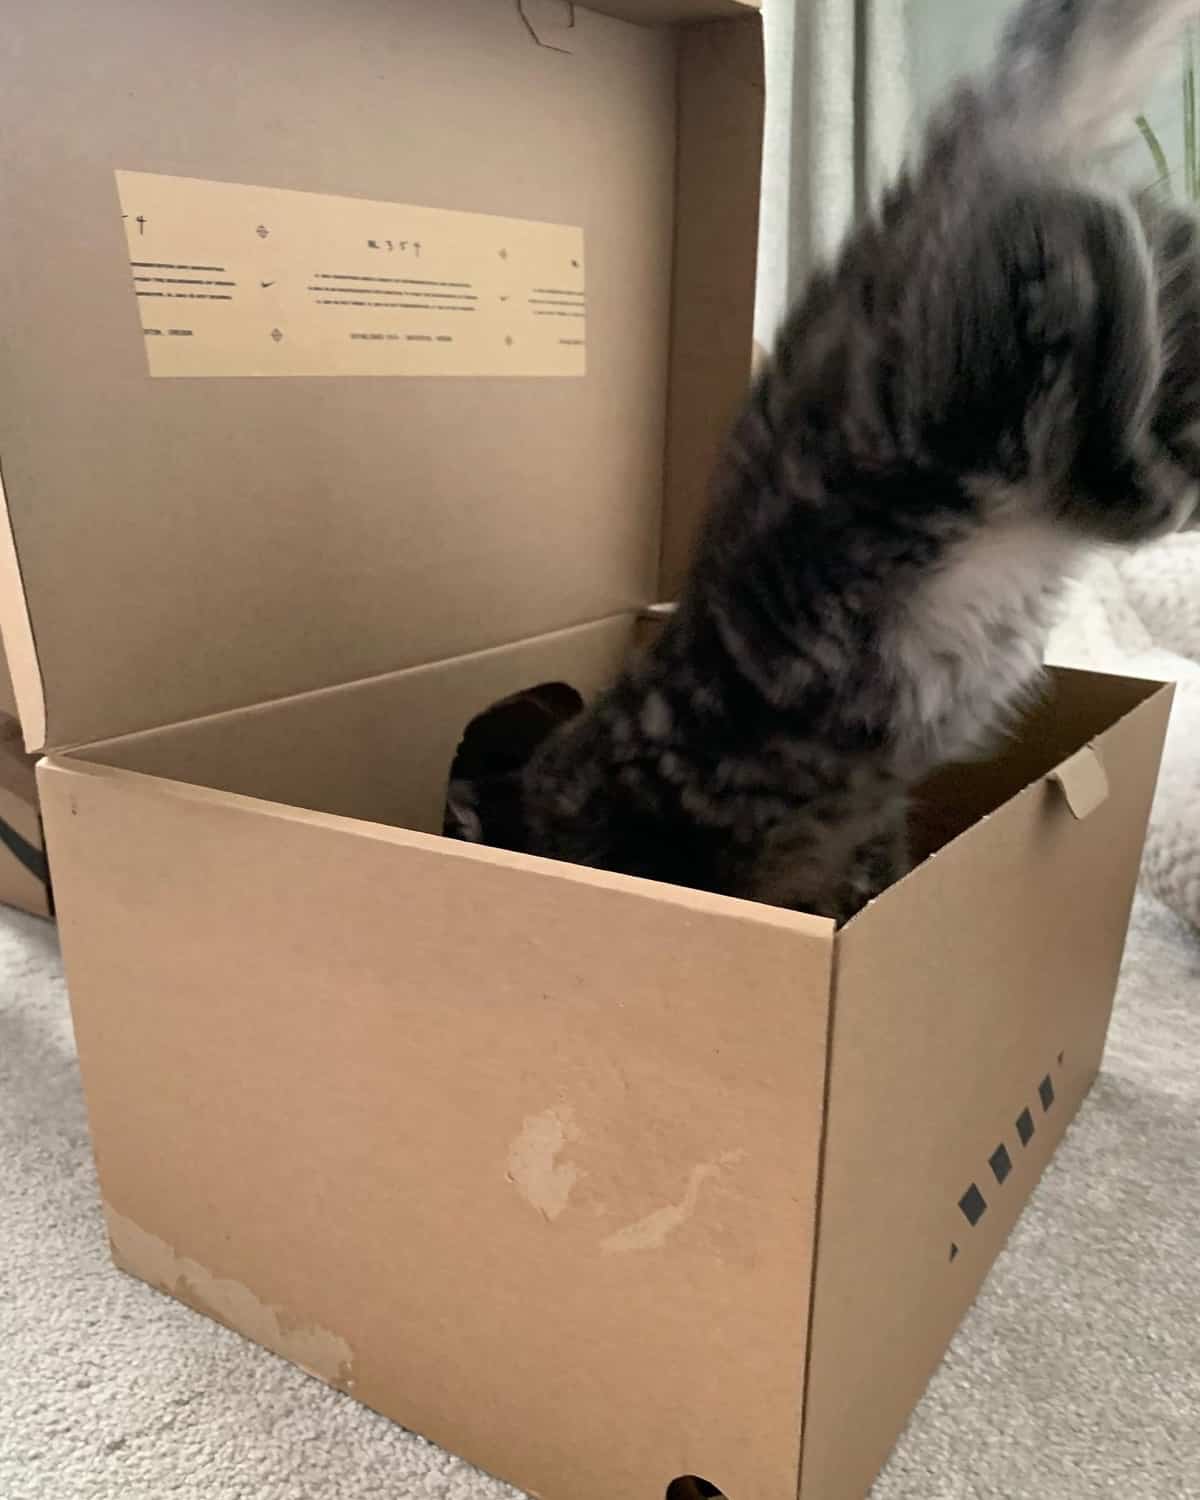 Kitten In Cardboard Box